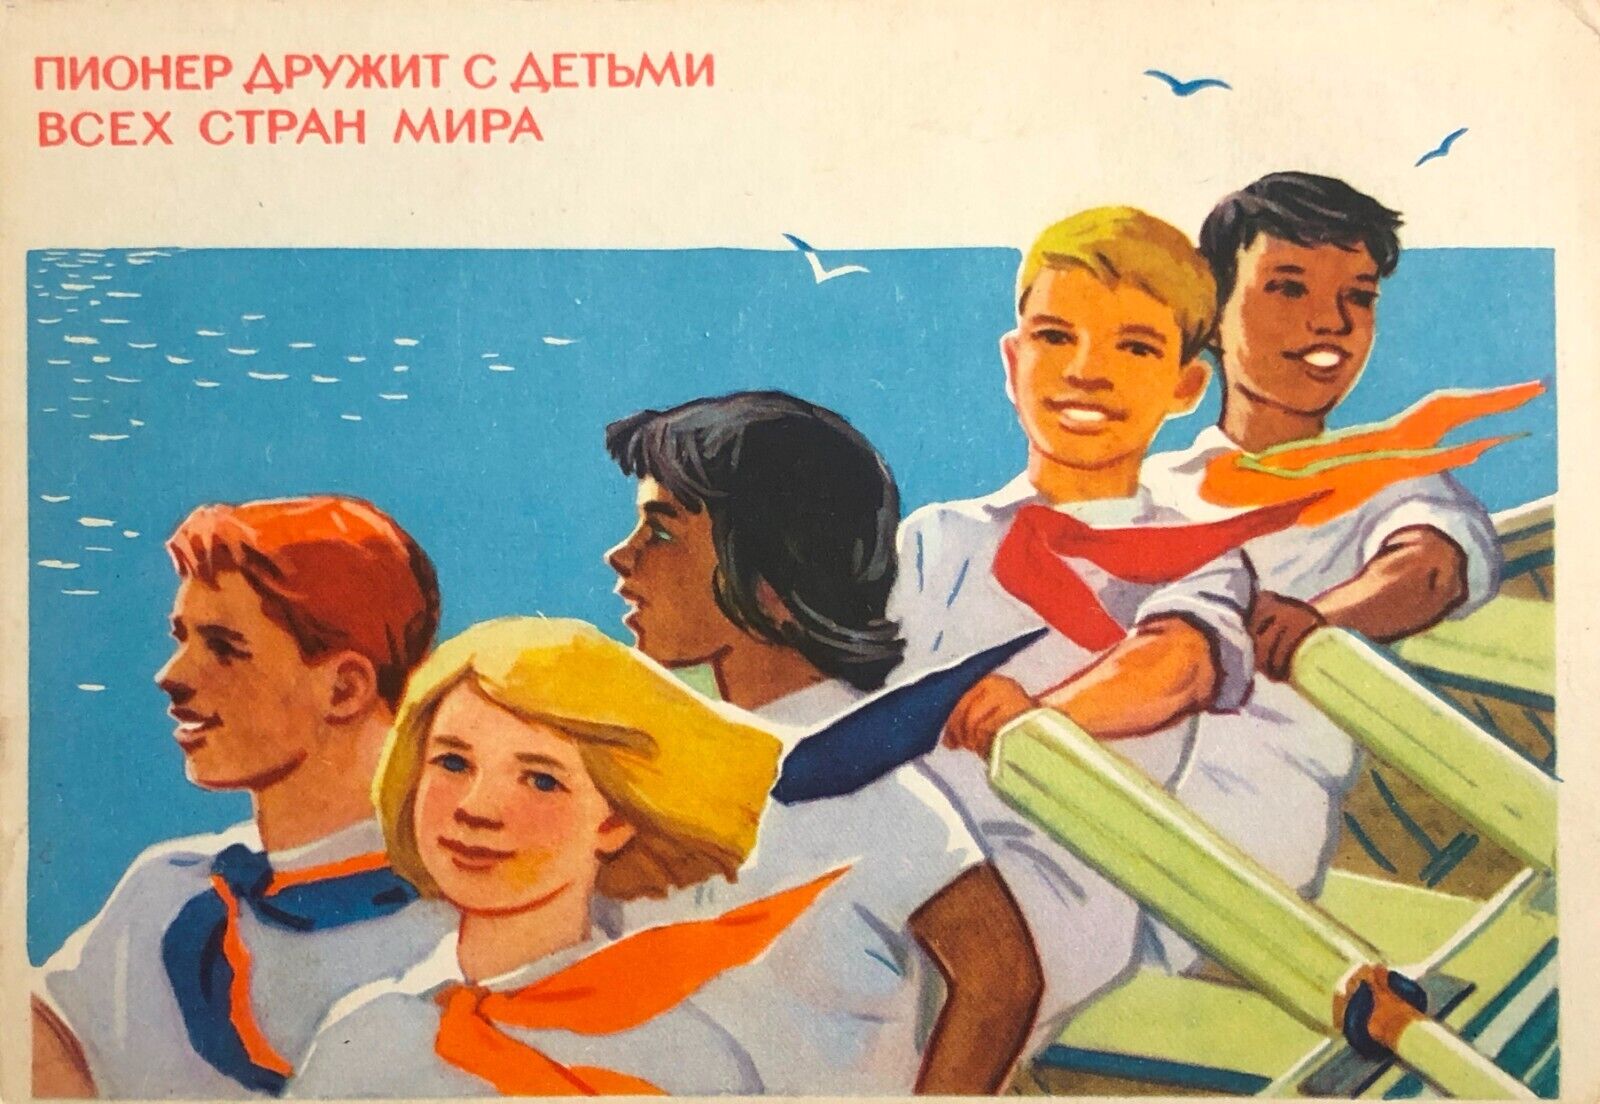 1964 Patriotic Girls Boys Pioneers Friendship Soviet Propaganda RARE Postcard